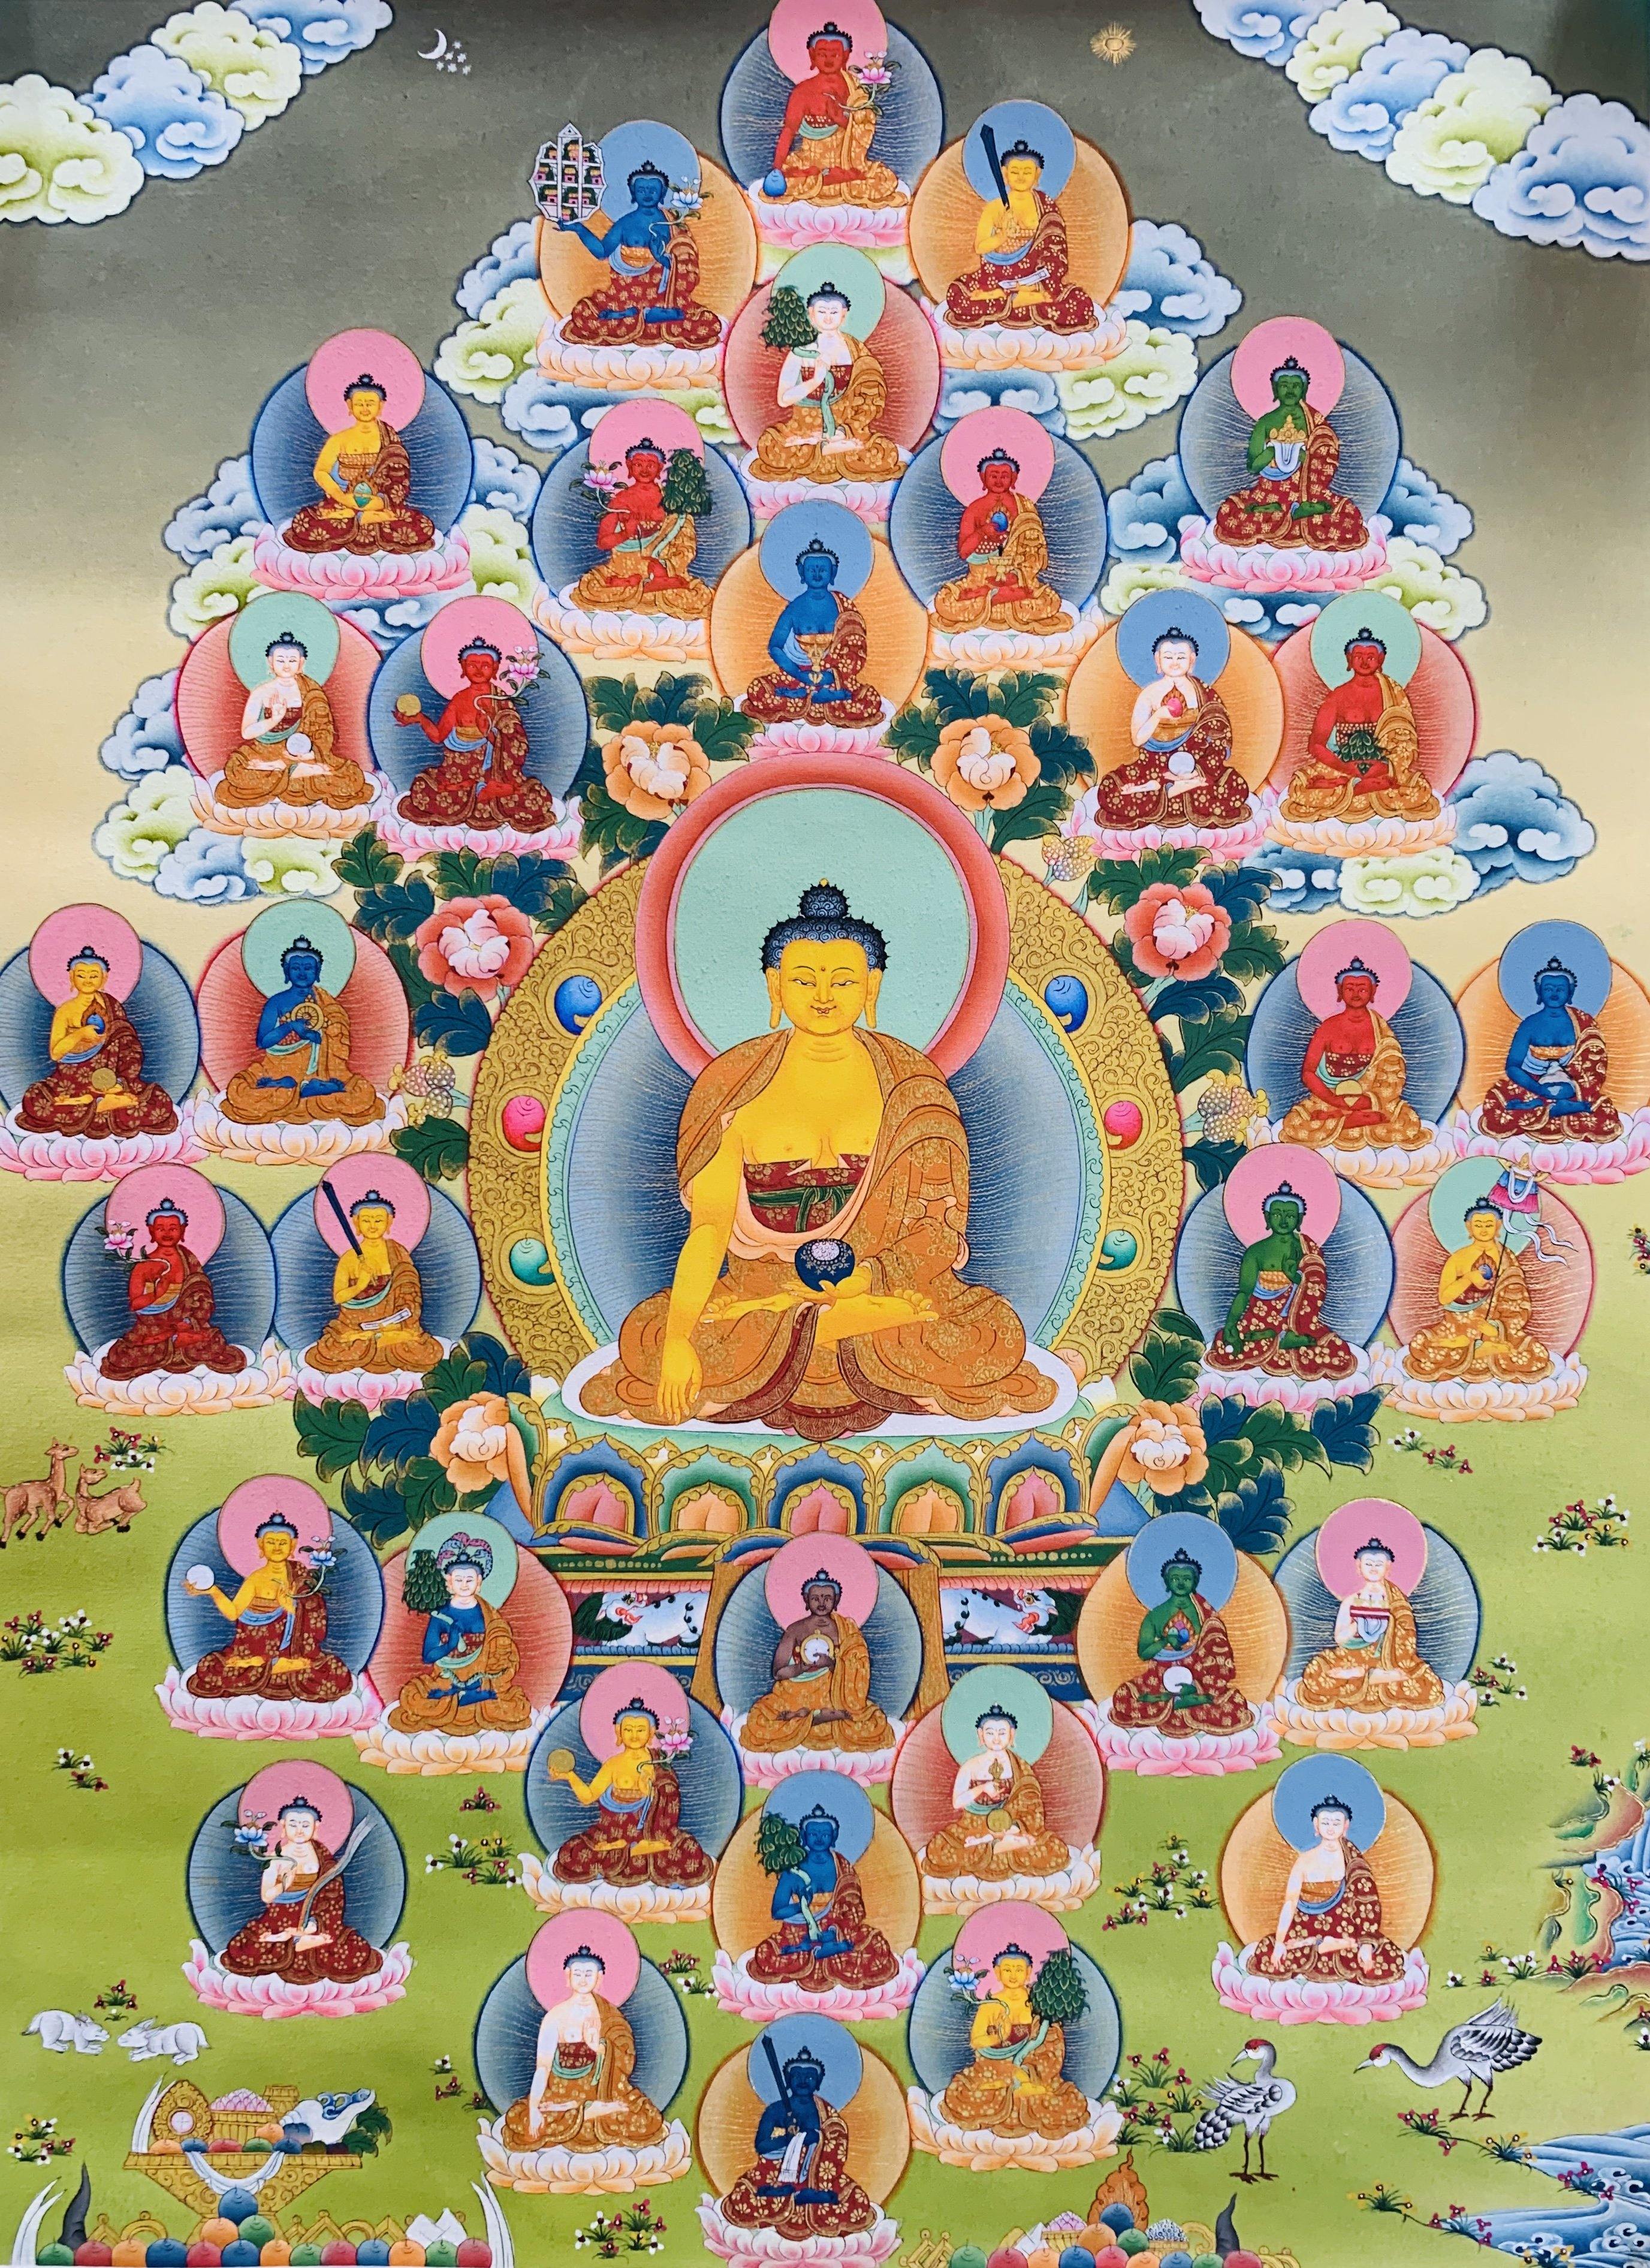 Shakyamuni Buddha and the Thirty-Five Buddhas of Confession Thangka Painting 56*42 - The Thangka